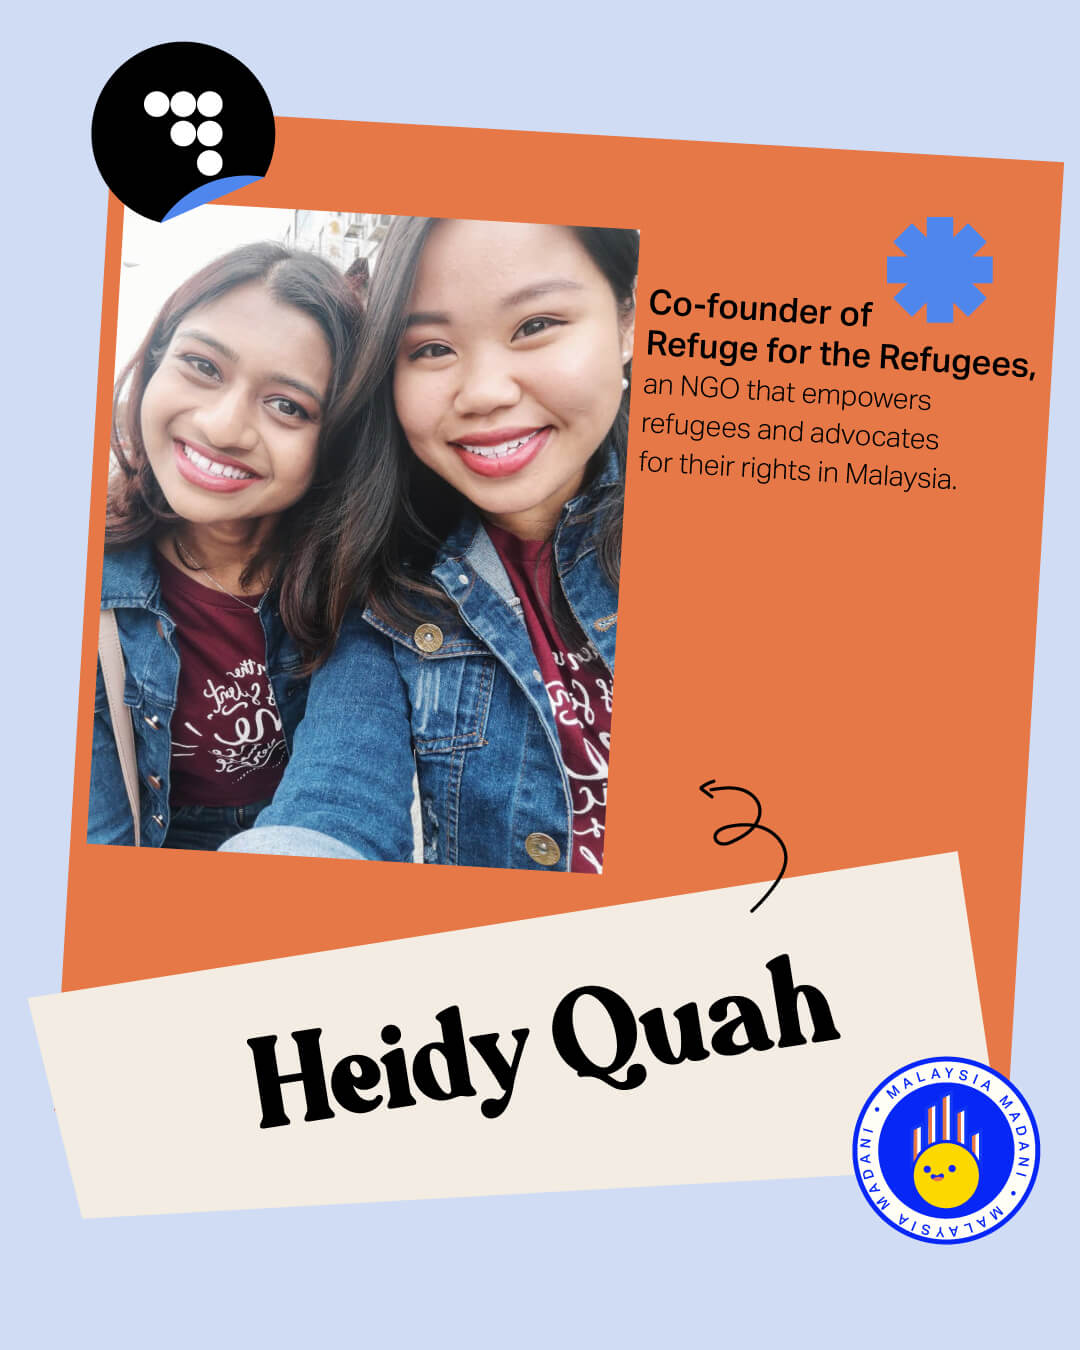 Heidy Quah, Co-founder of Refuge for the Refugees 